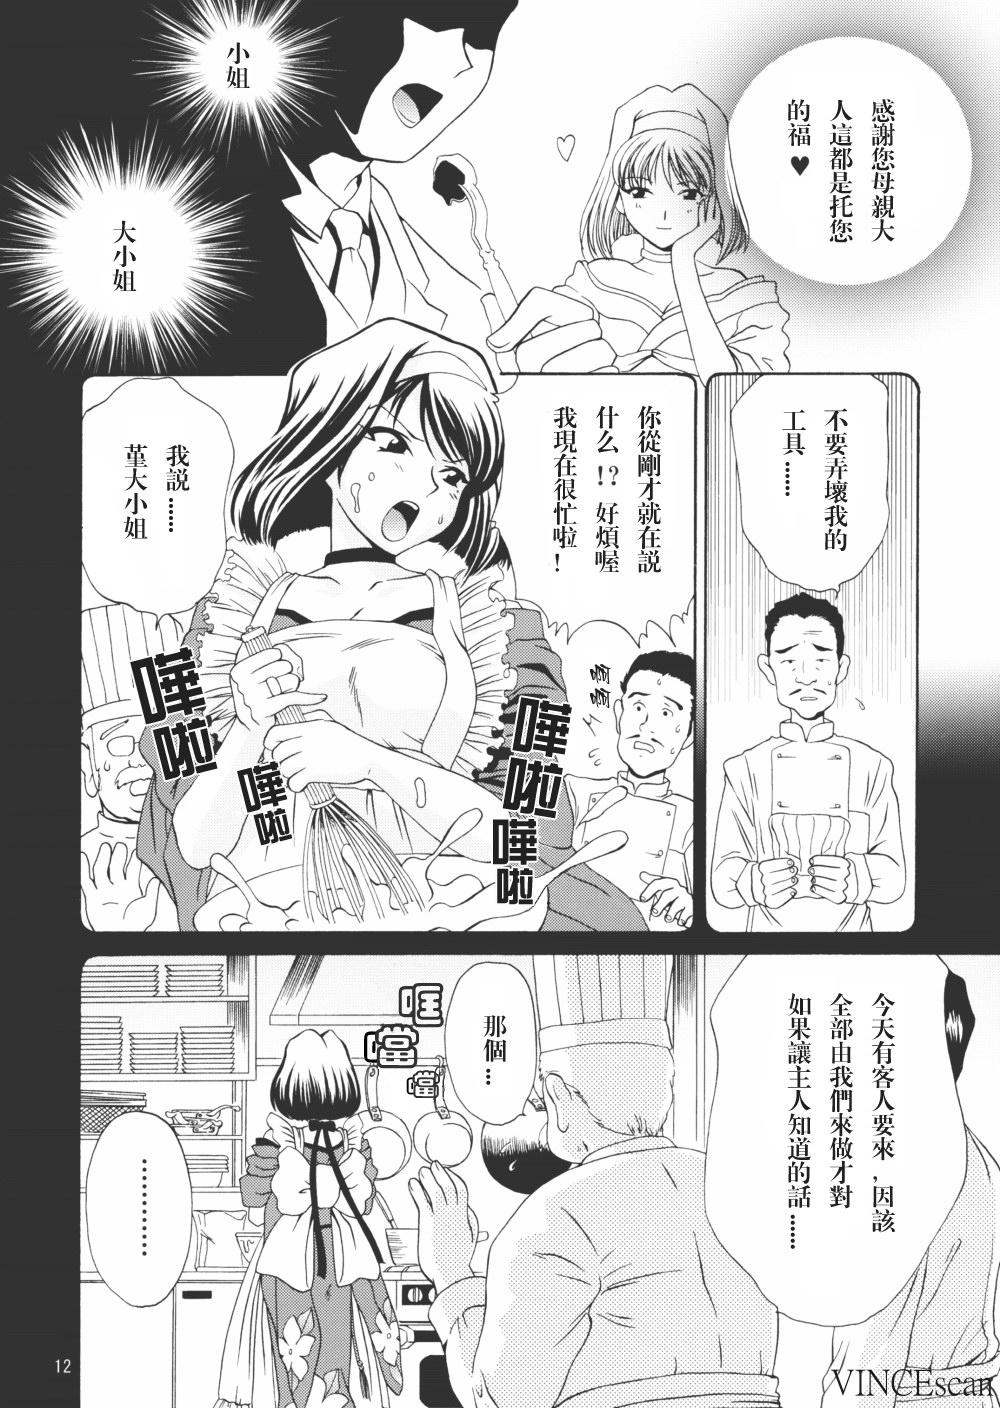 Butts Chocolate Panic - Sakura taisen Asian - Page 11